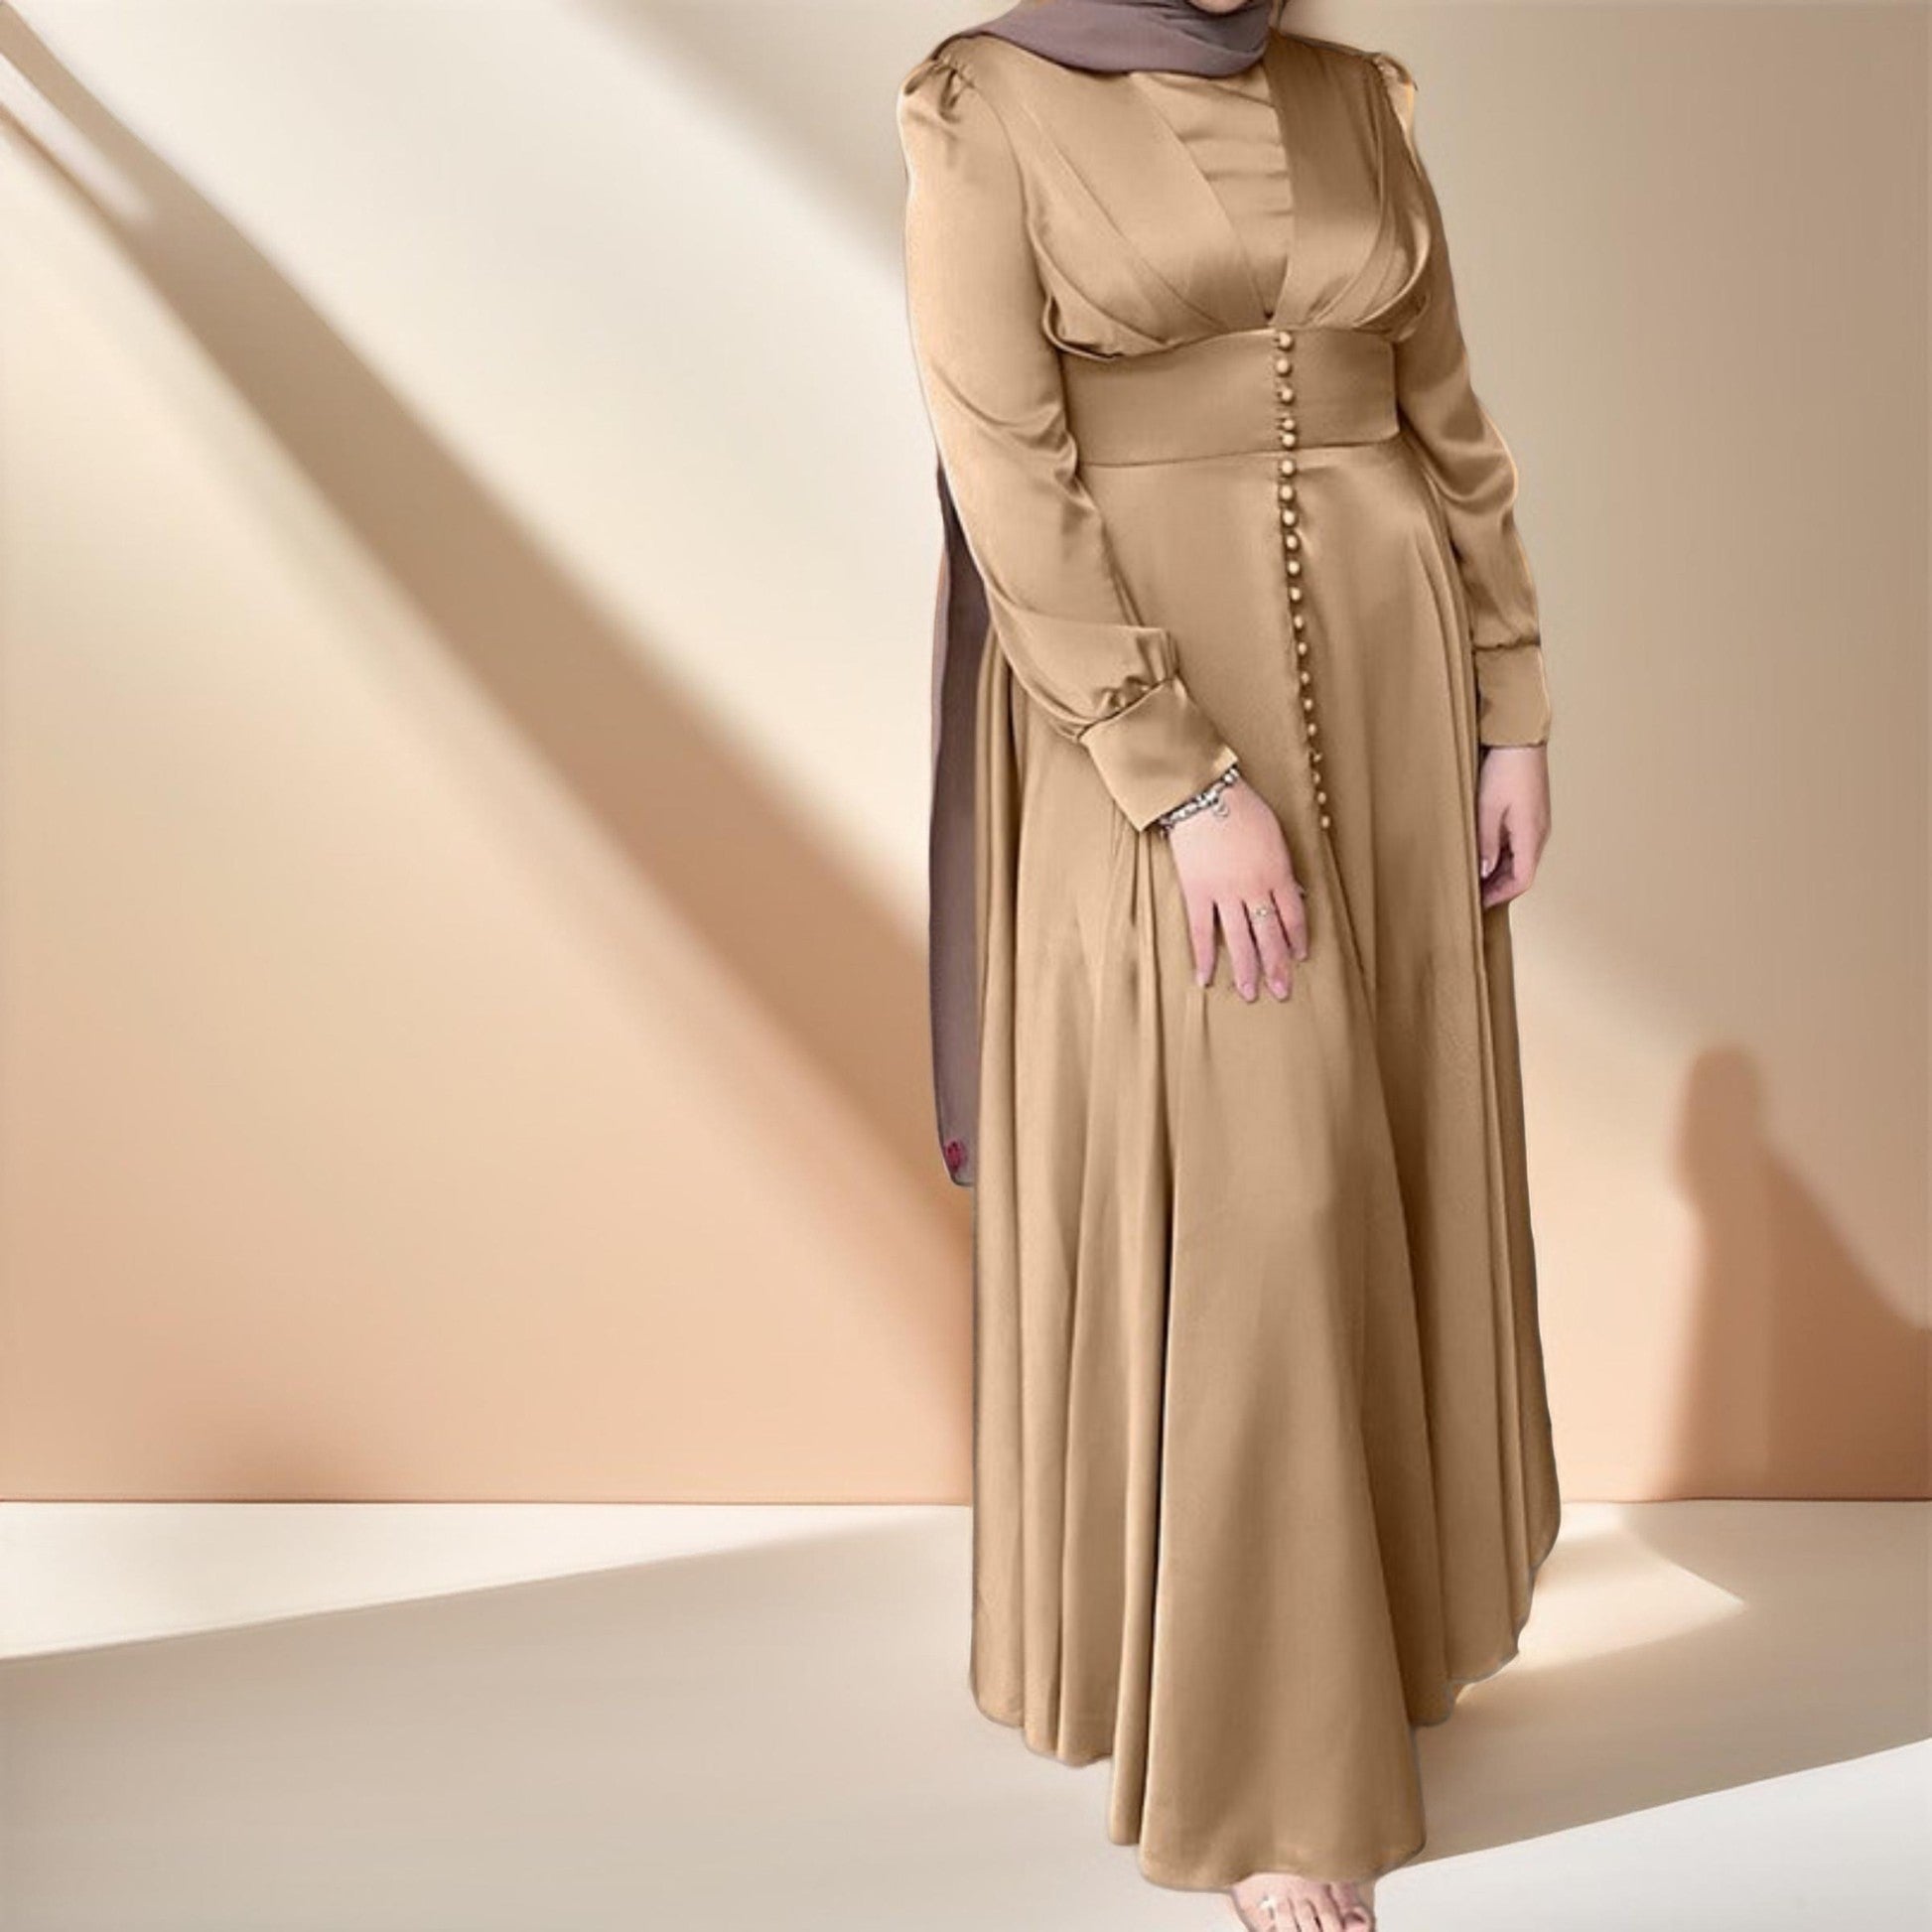 Festive dubai style-Evening dress - Try Modest Limited 